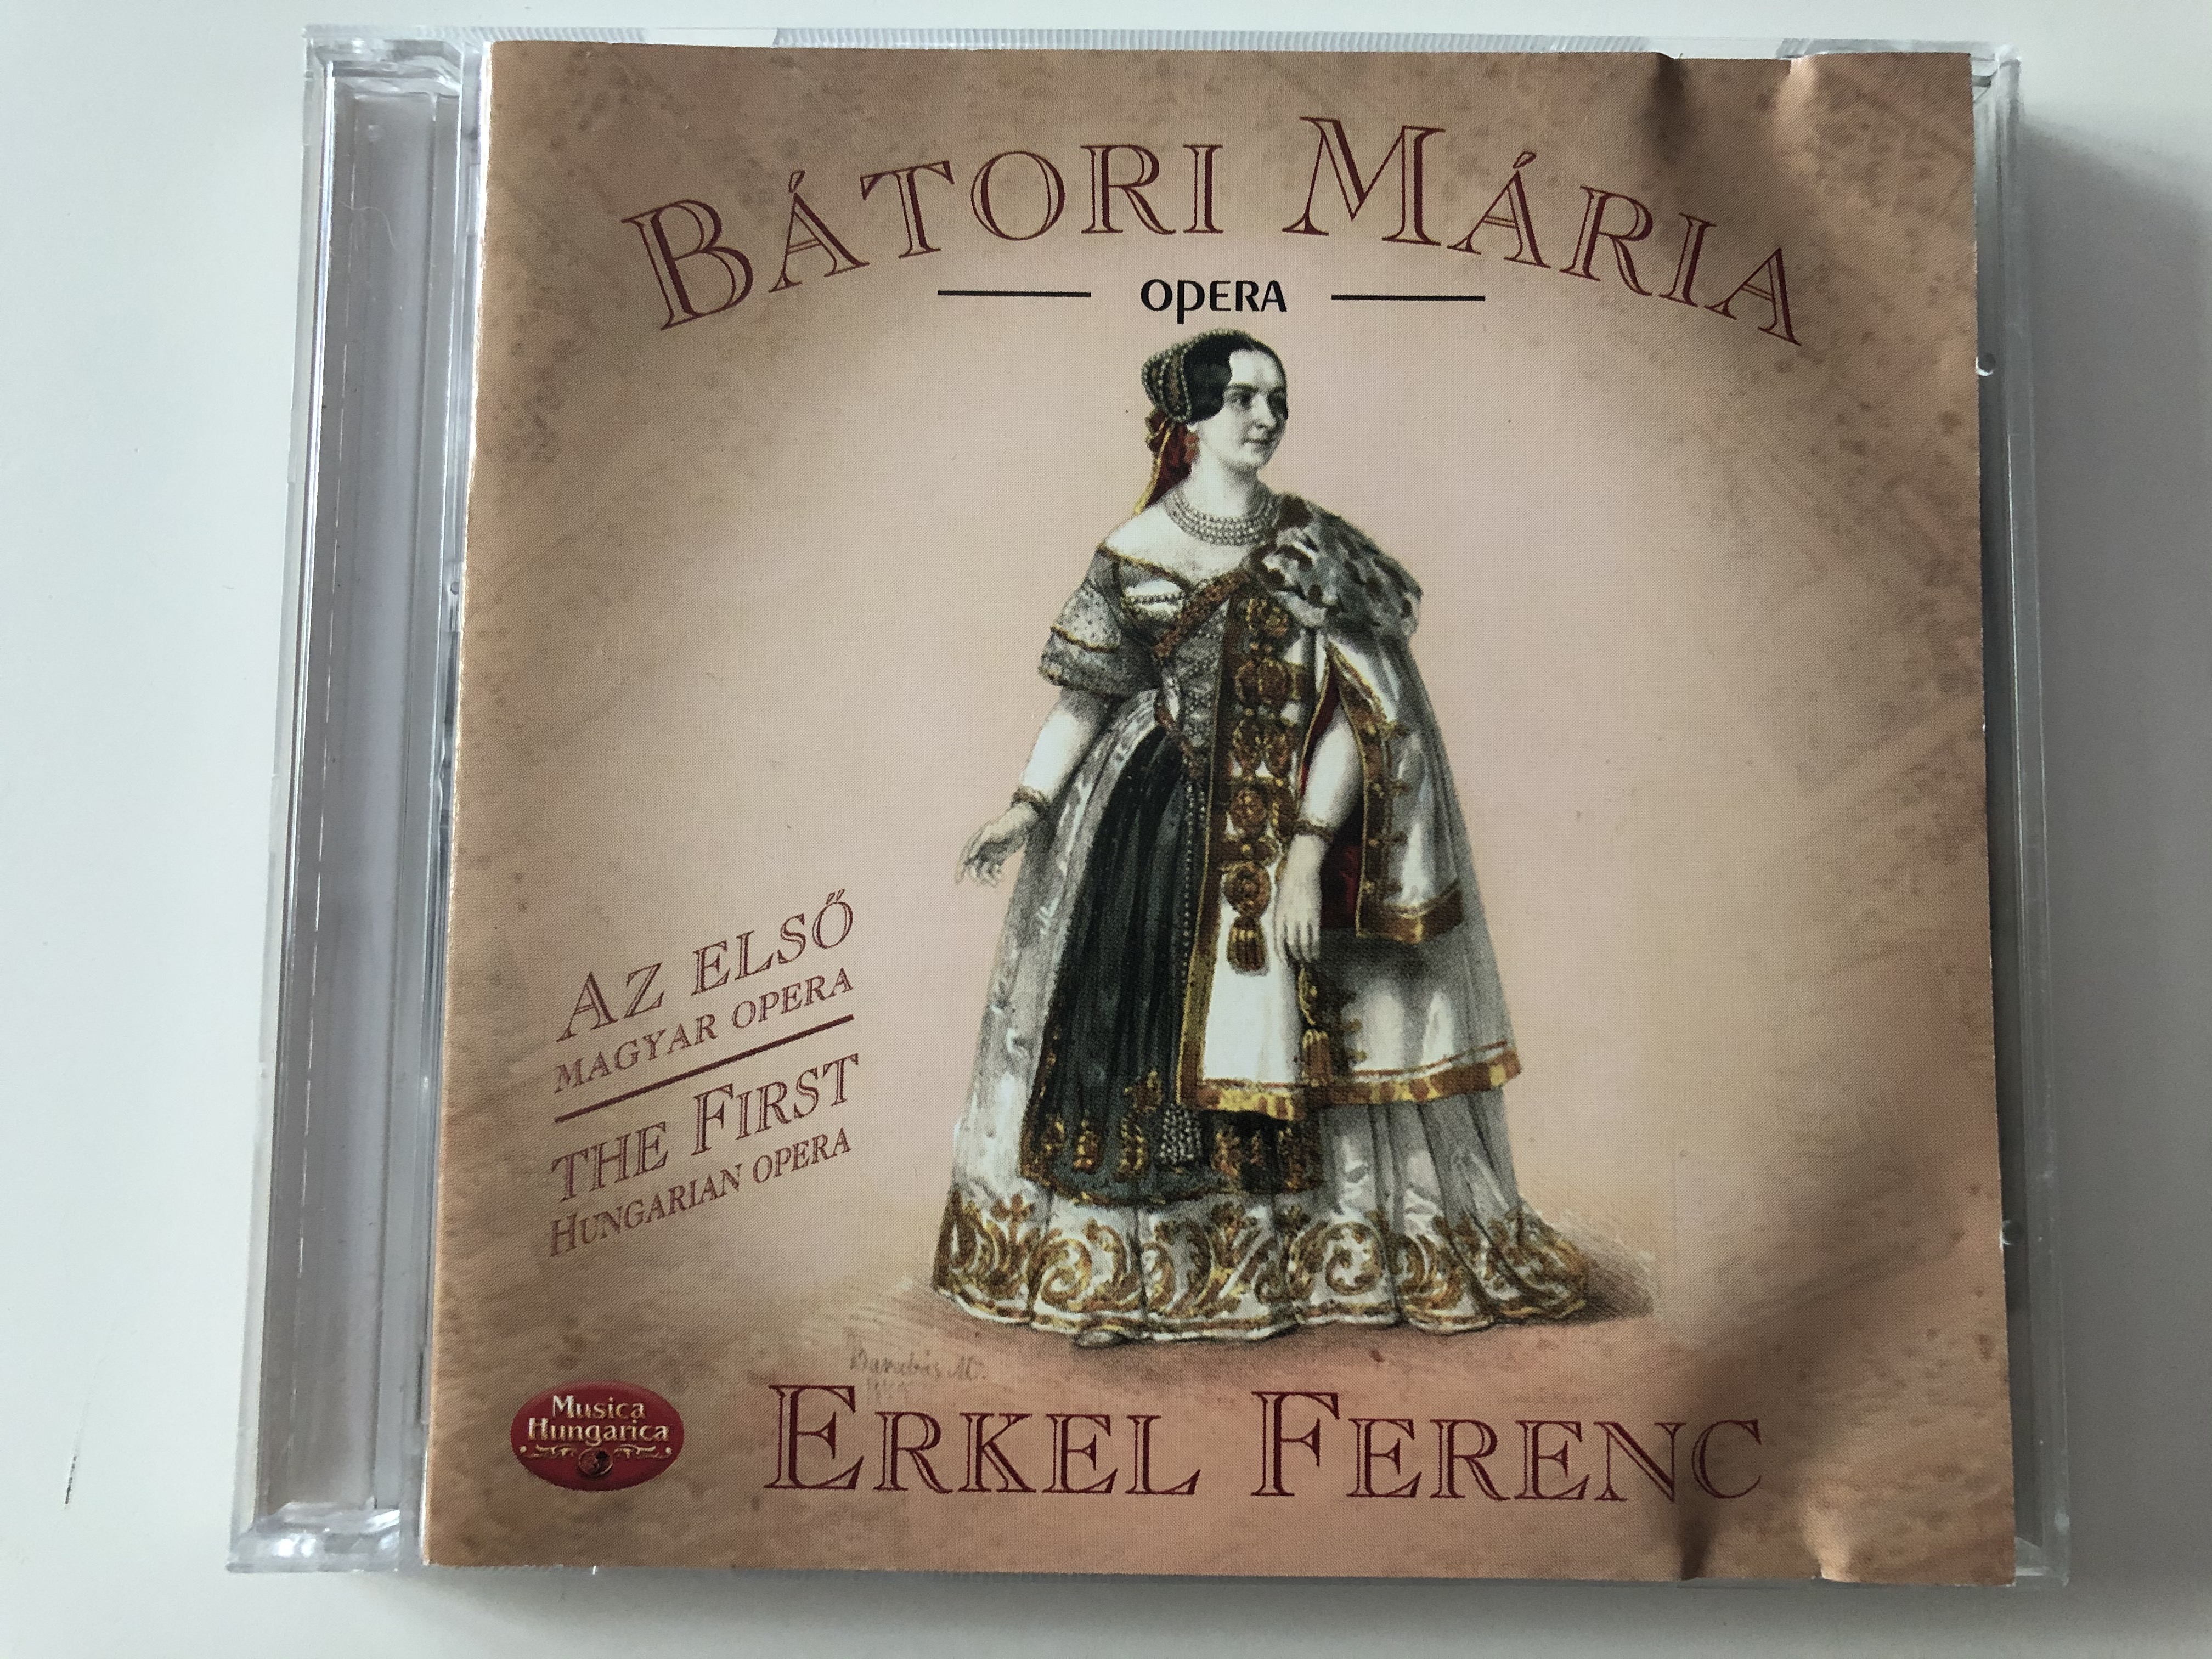 batori-maria-opera-az-elso-magyar-opera-the-first-hungarian-opera-erkel-ferenc-musica-hungarica-ltd.-budapest-2x-audio-cd-2001-stereo-mha-222-1-.jpg